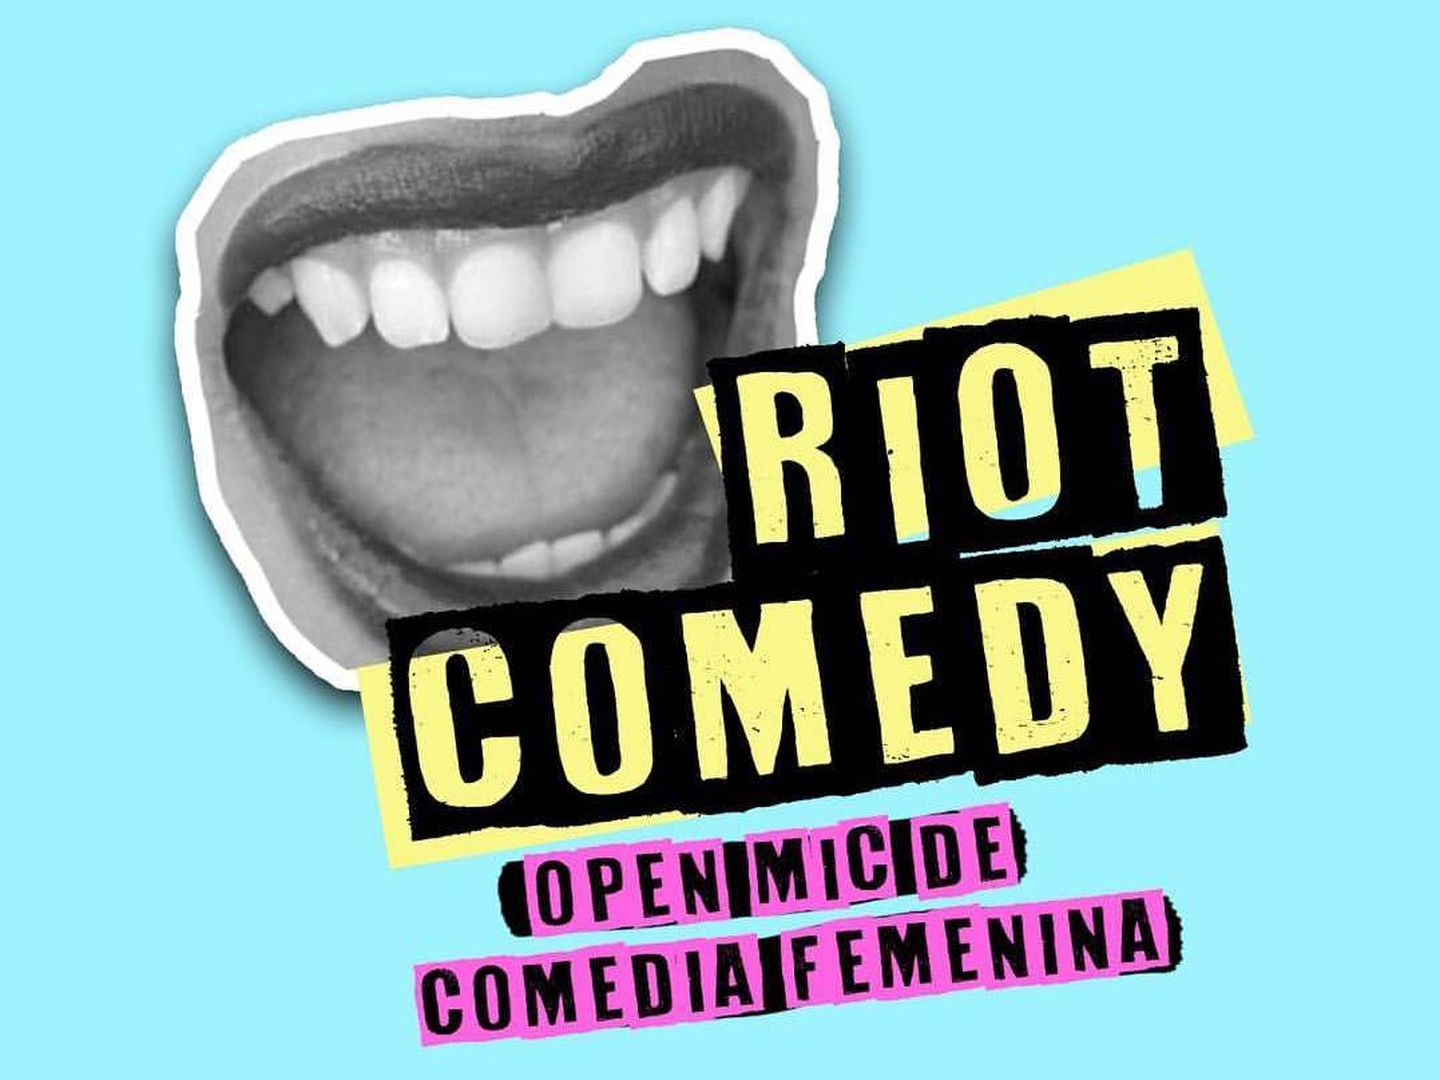 Logo del 'Riot Comedy' para promocionar la comedia femenina